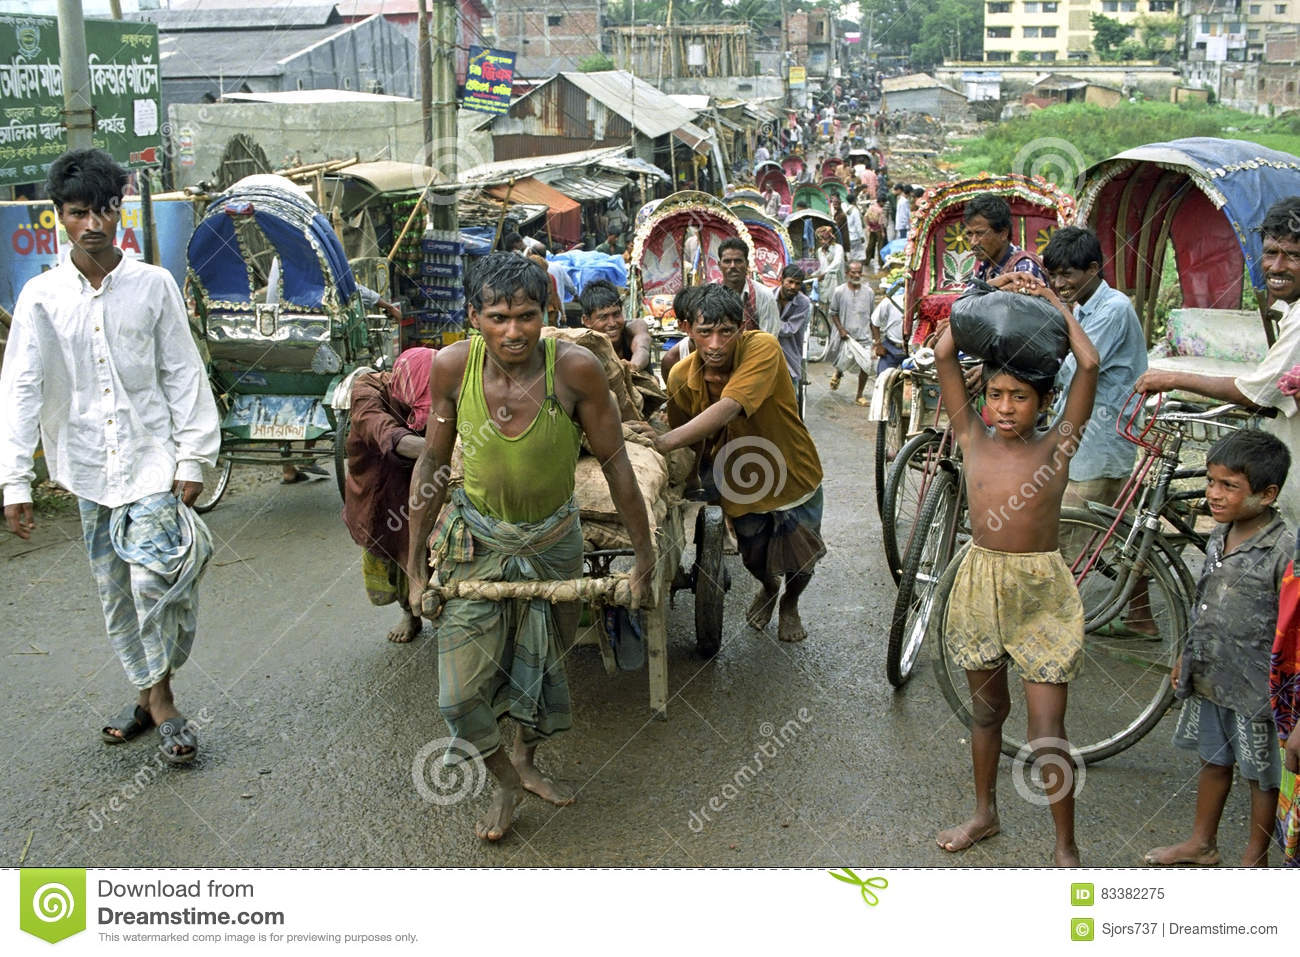 street-view-dhaka-bangladeshi-workers-work-bangladesh-capital-city-lalbagh-area-shopping-slum-...jpg